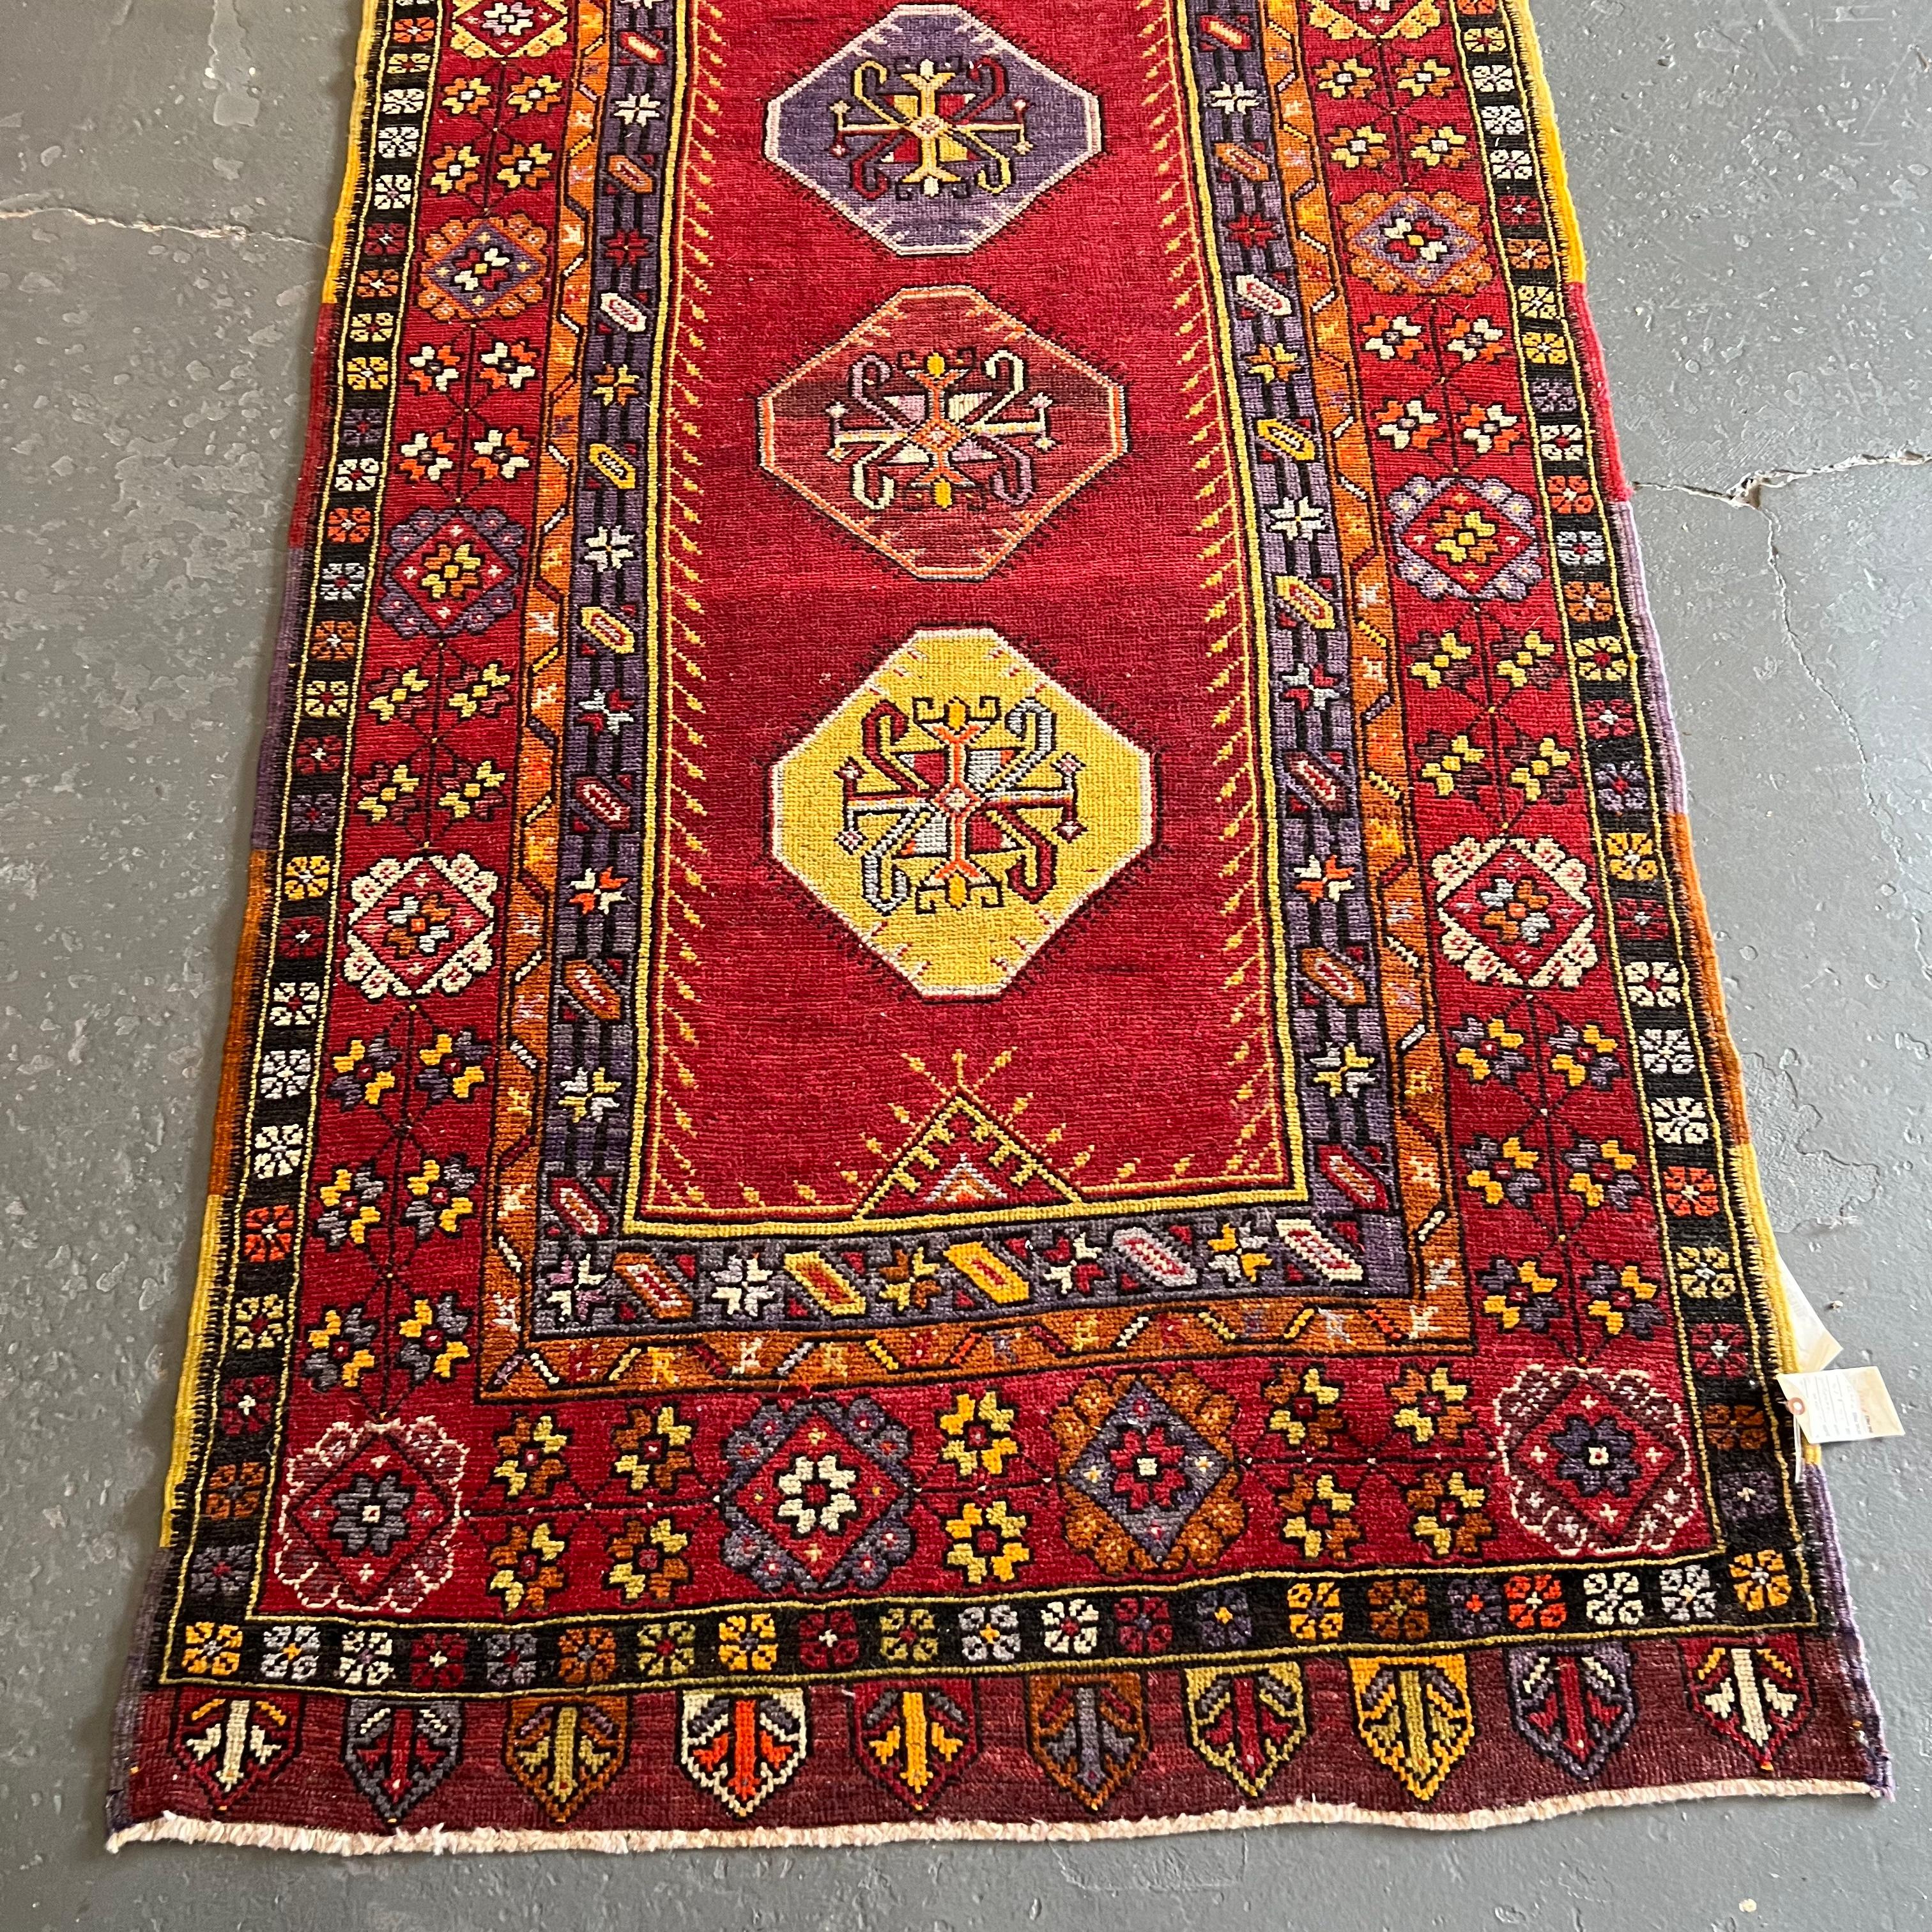 Vintage Turkish Anatolian rug with red, purple, yellow and orange hues.